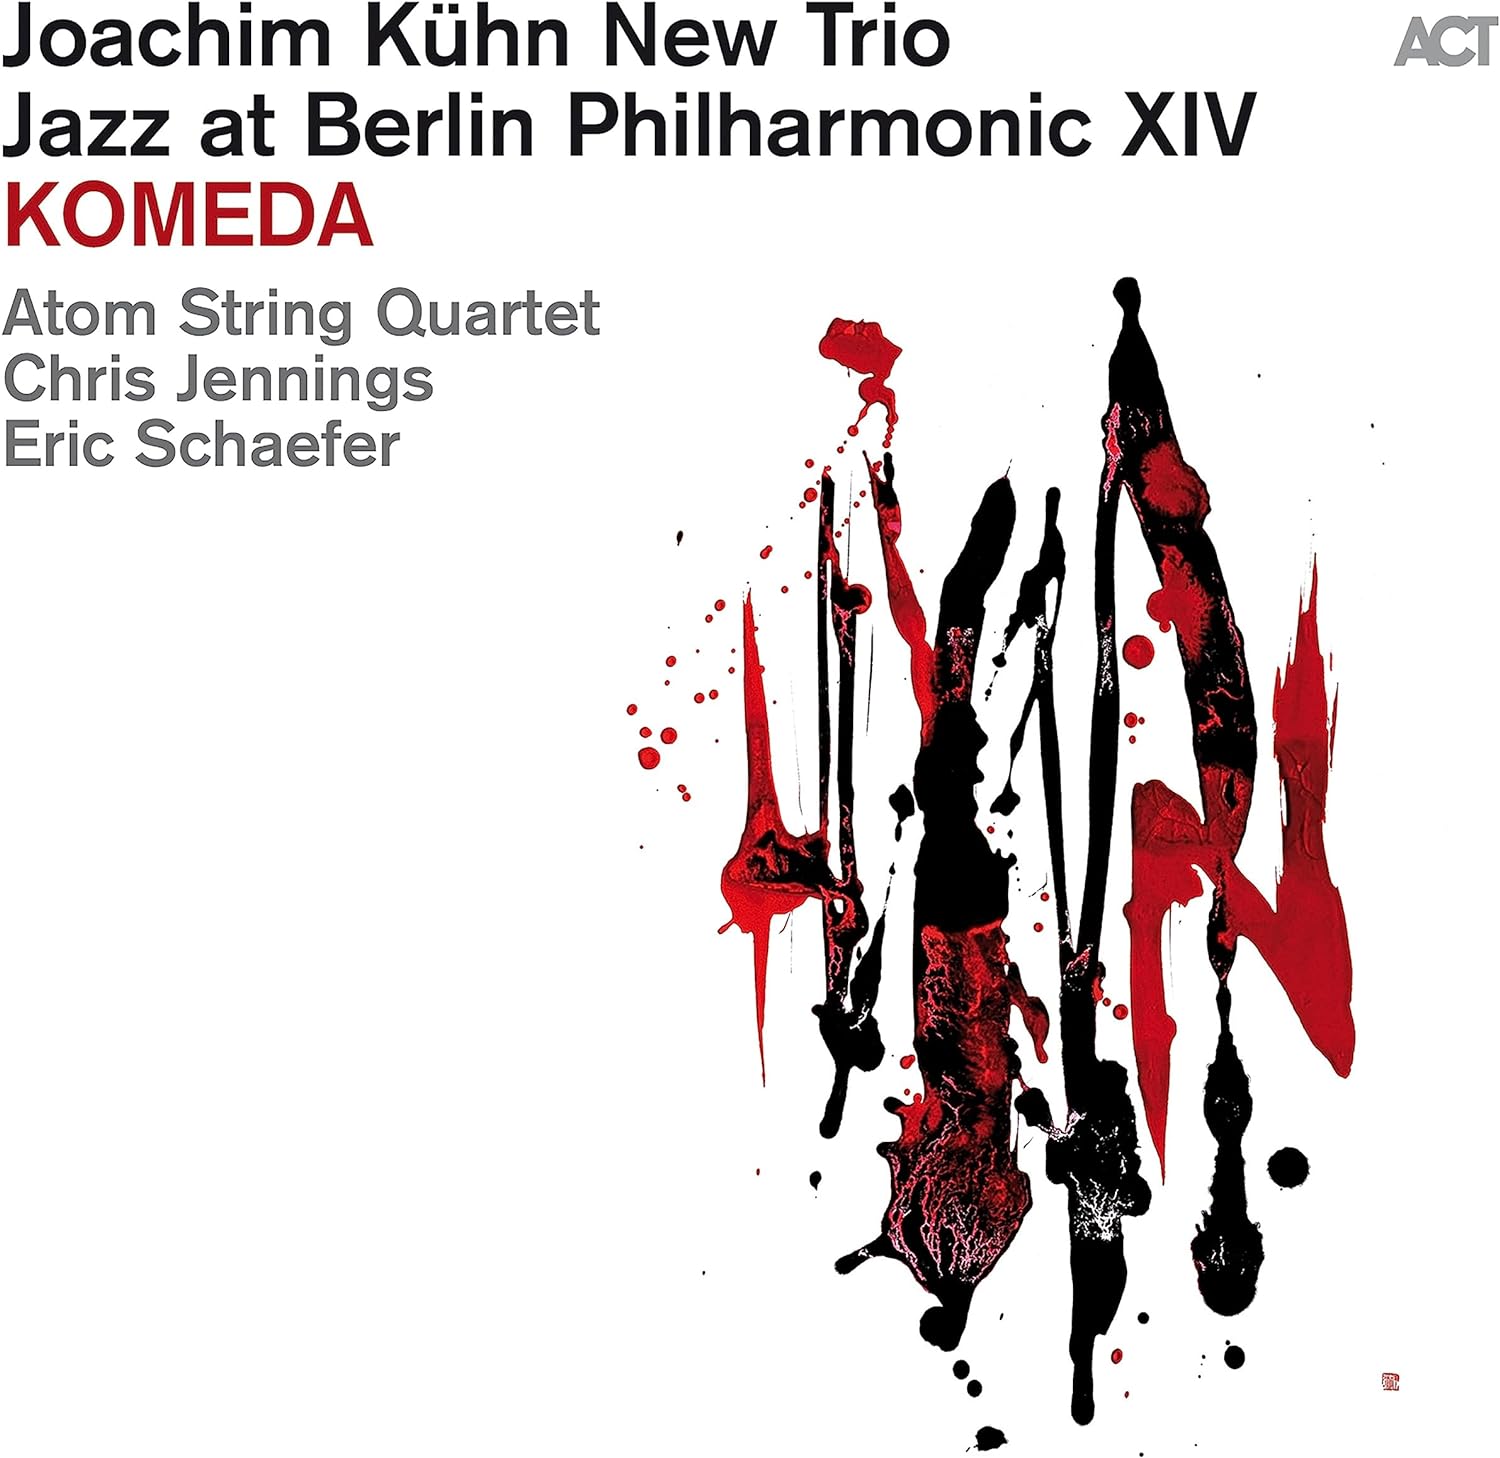 Jazz at Berlin Philharmonic XIV: Komeda | Joachim Kuhn New Trio